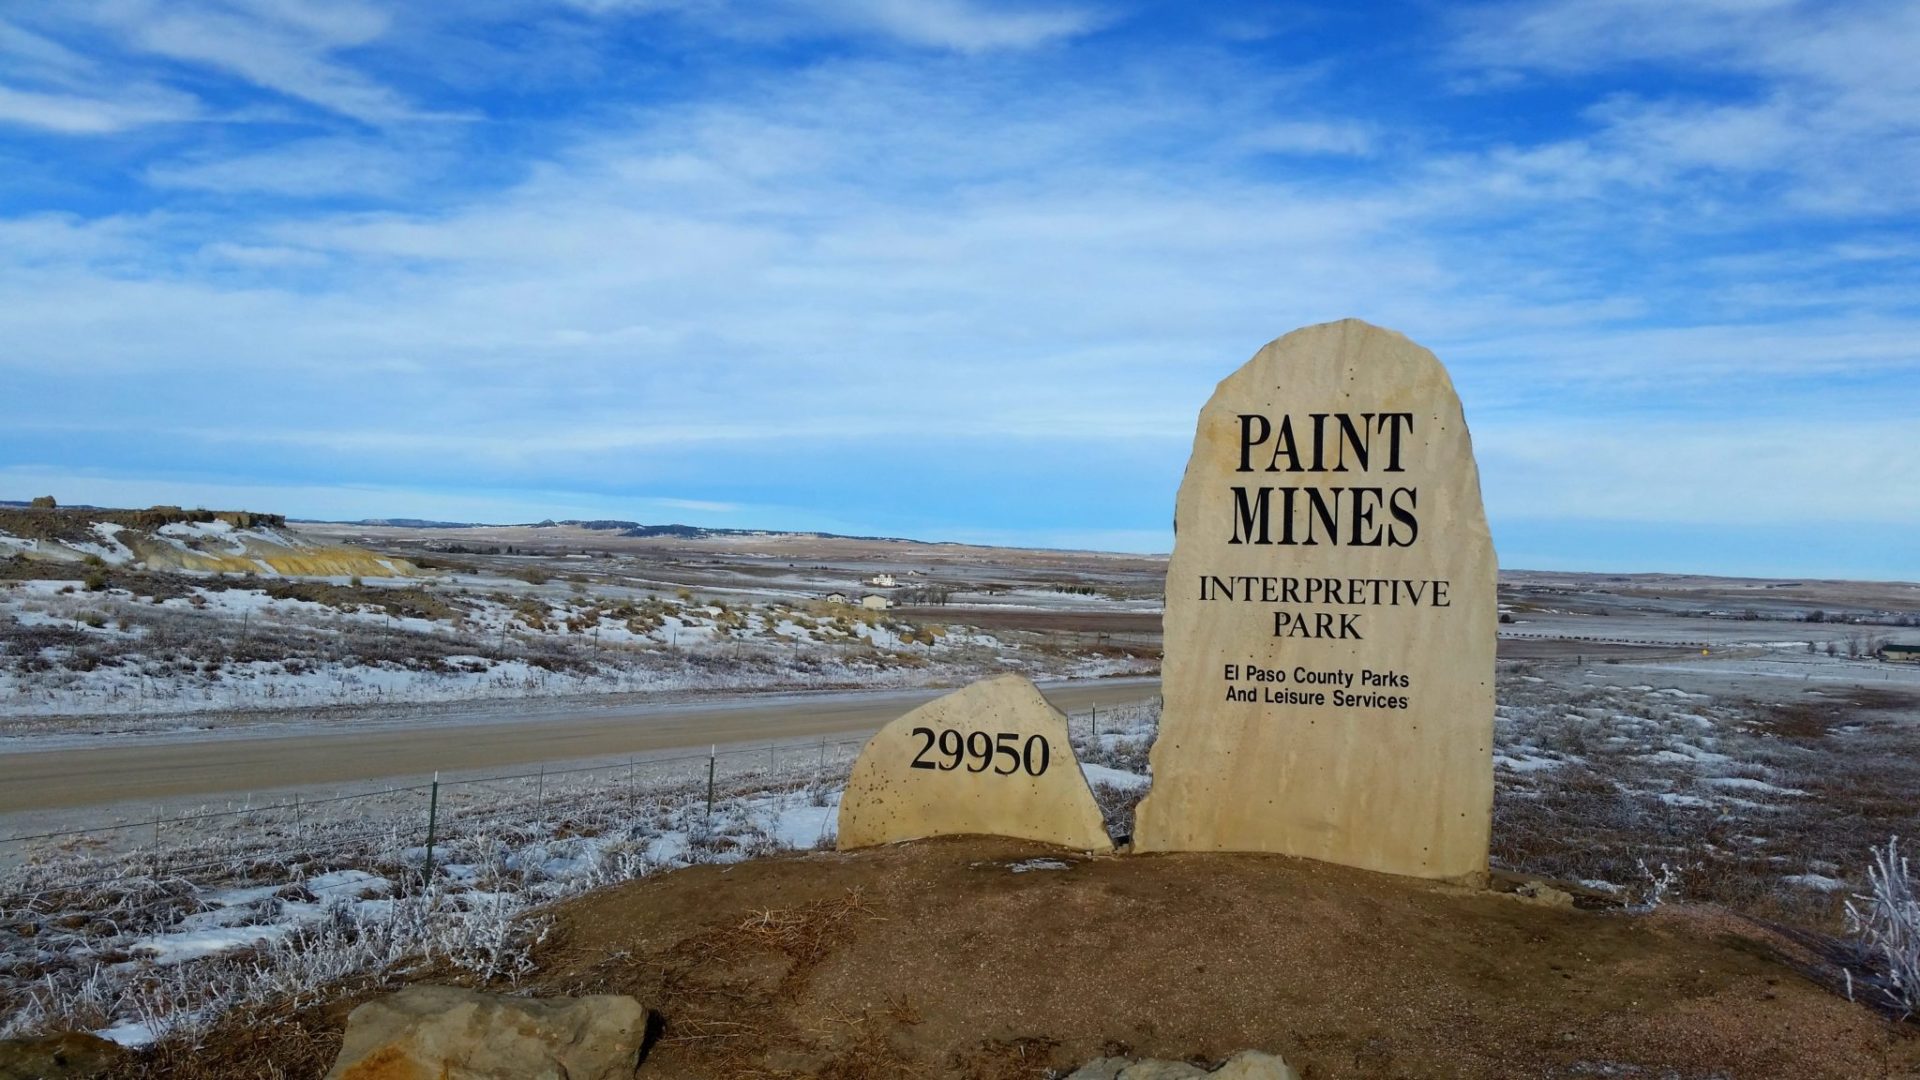 Entrance to Paint Mines Park